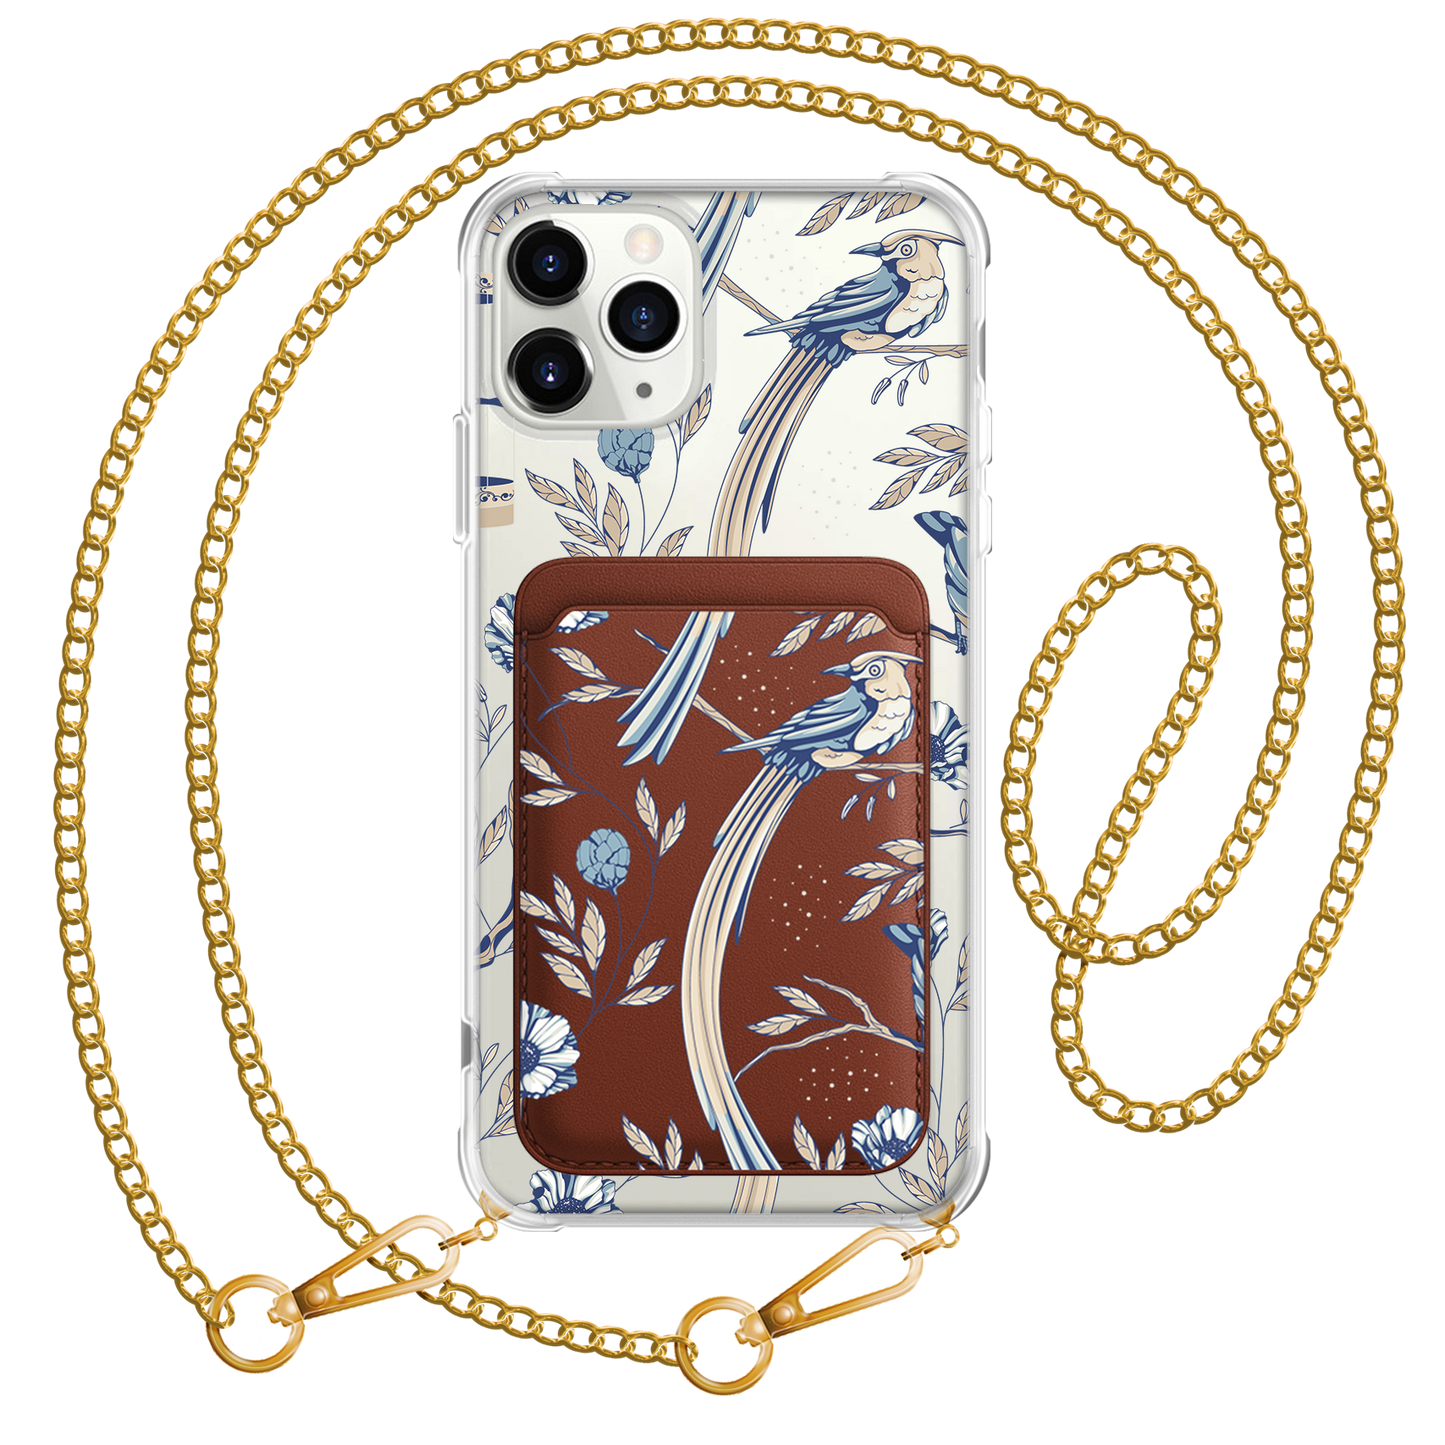 iPhone Magnetic Wallet Case - Lovebird 5.0